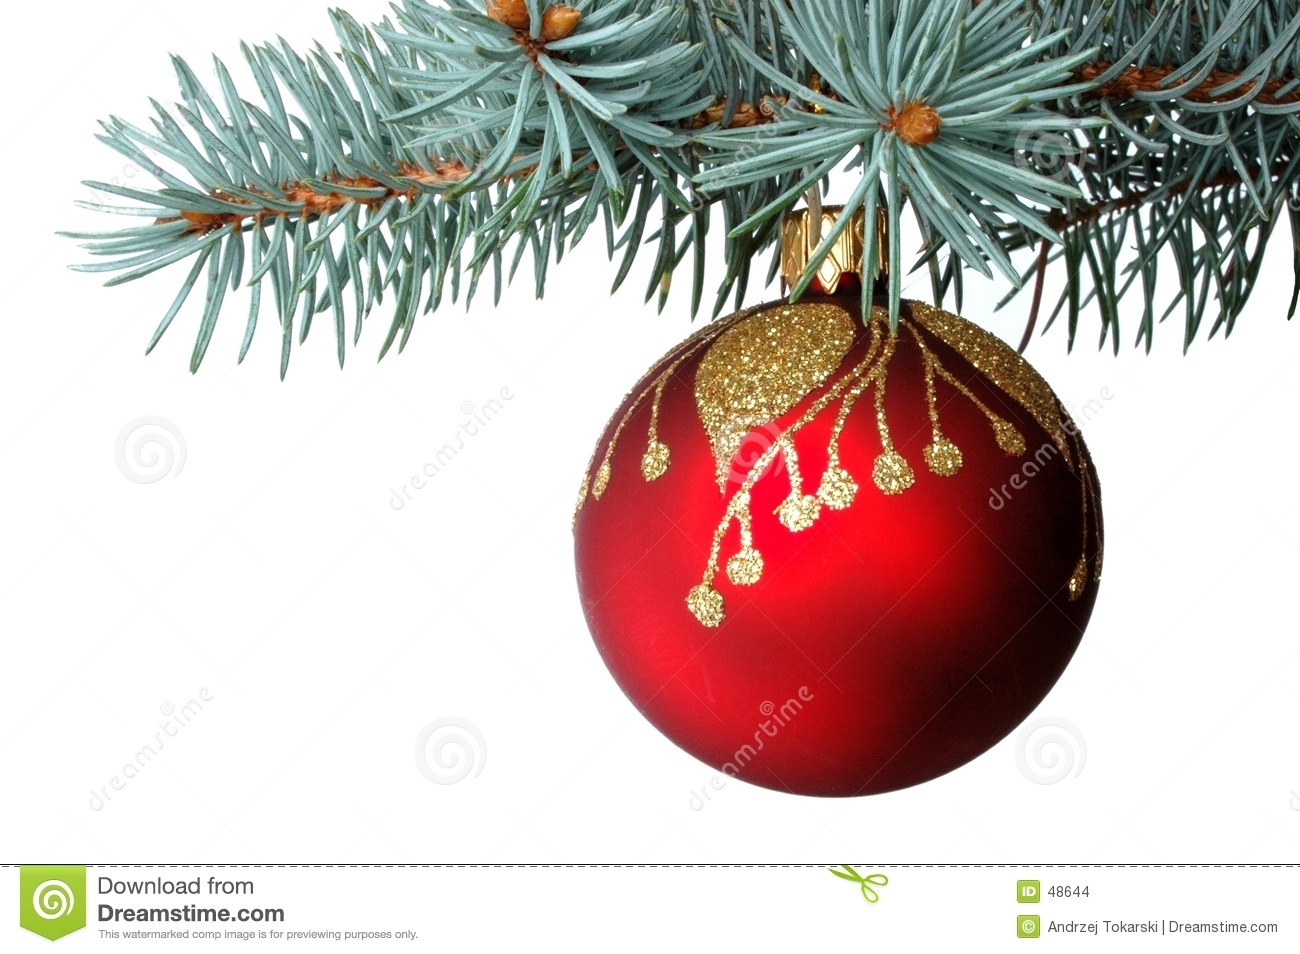 https://madyna.be/storage/activity_photos/60ec56b1e21f7/kerstfeest.jpg